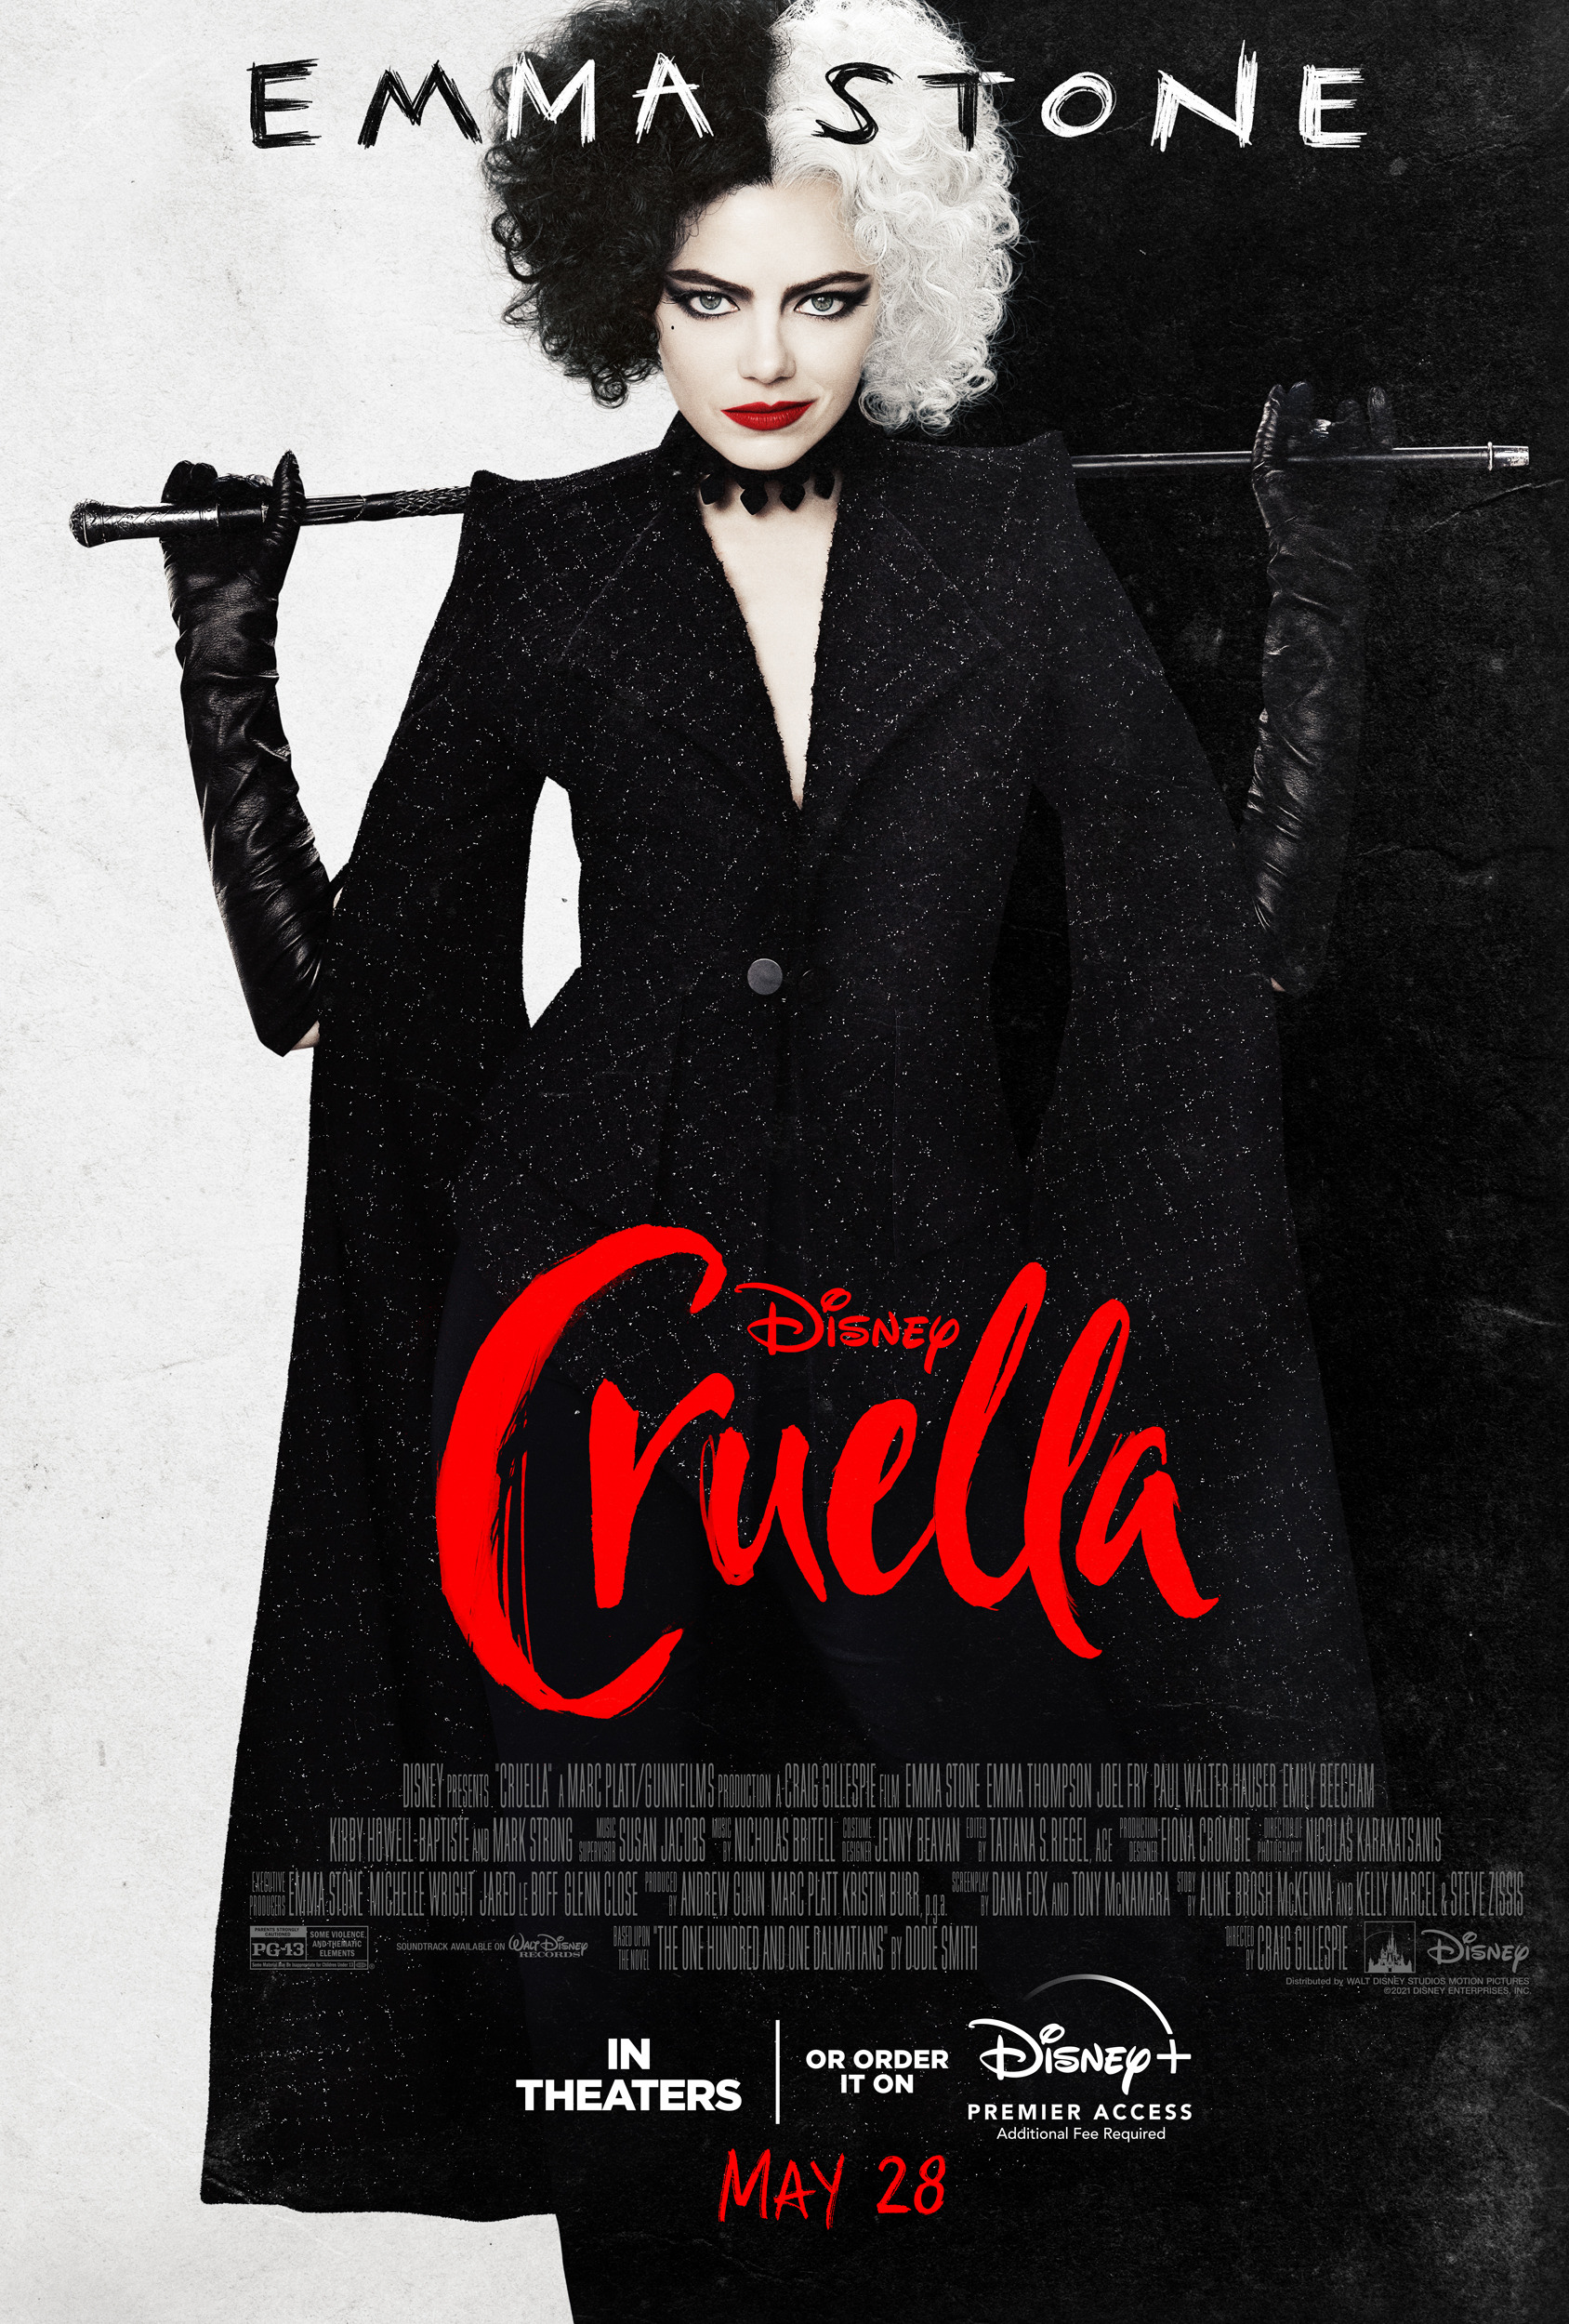 Disney’s CRUELLA gets a new trailer – Emma Stone is the iconic villain from 101 DALMATIANS